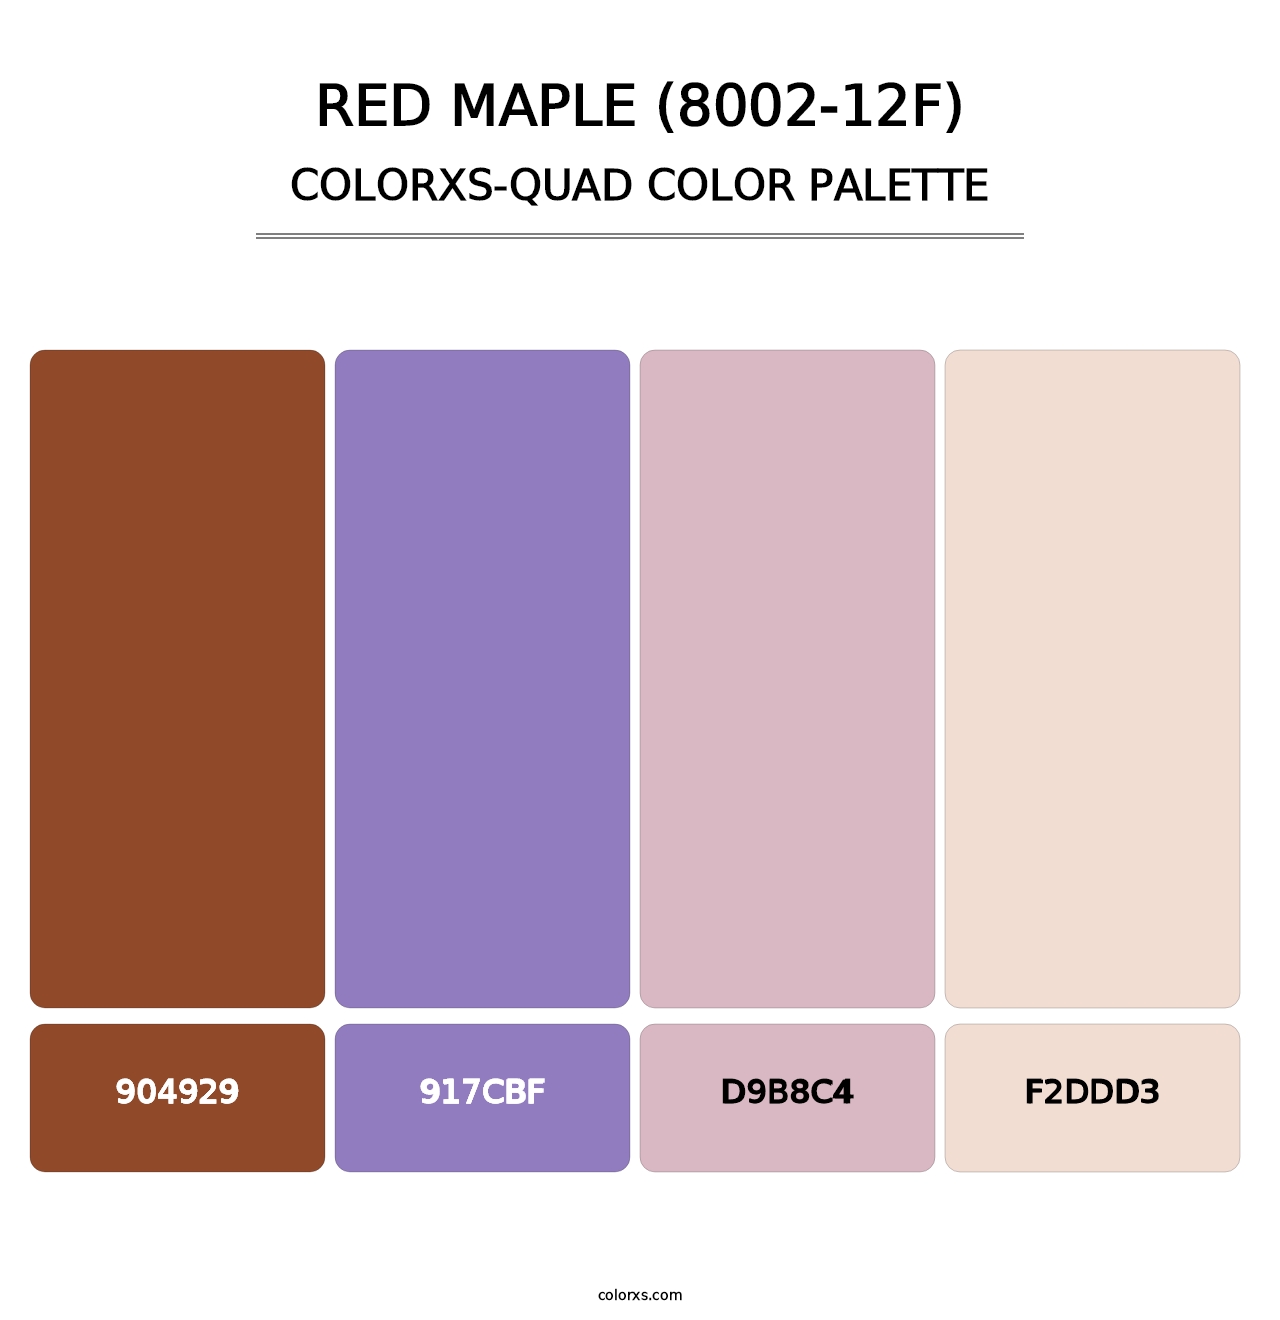 Red Maple (8002-12F) - Colorxs Quad Palette